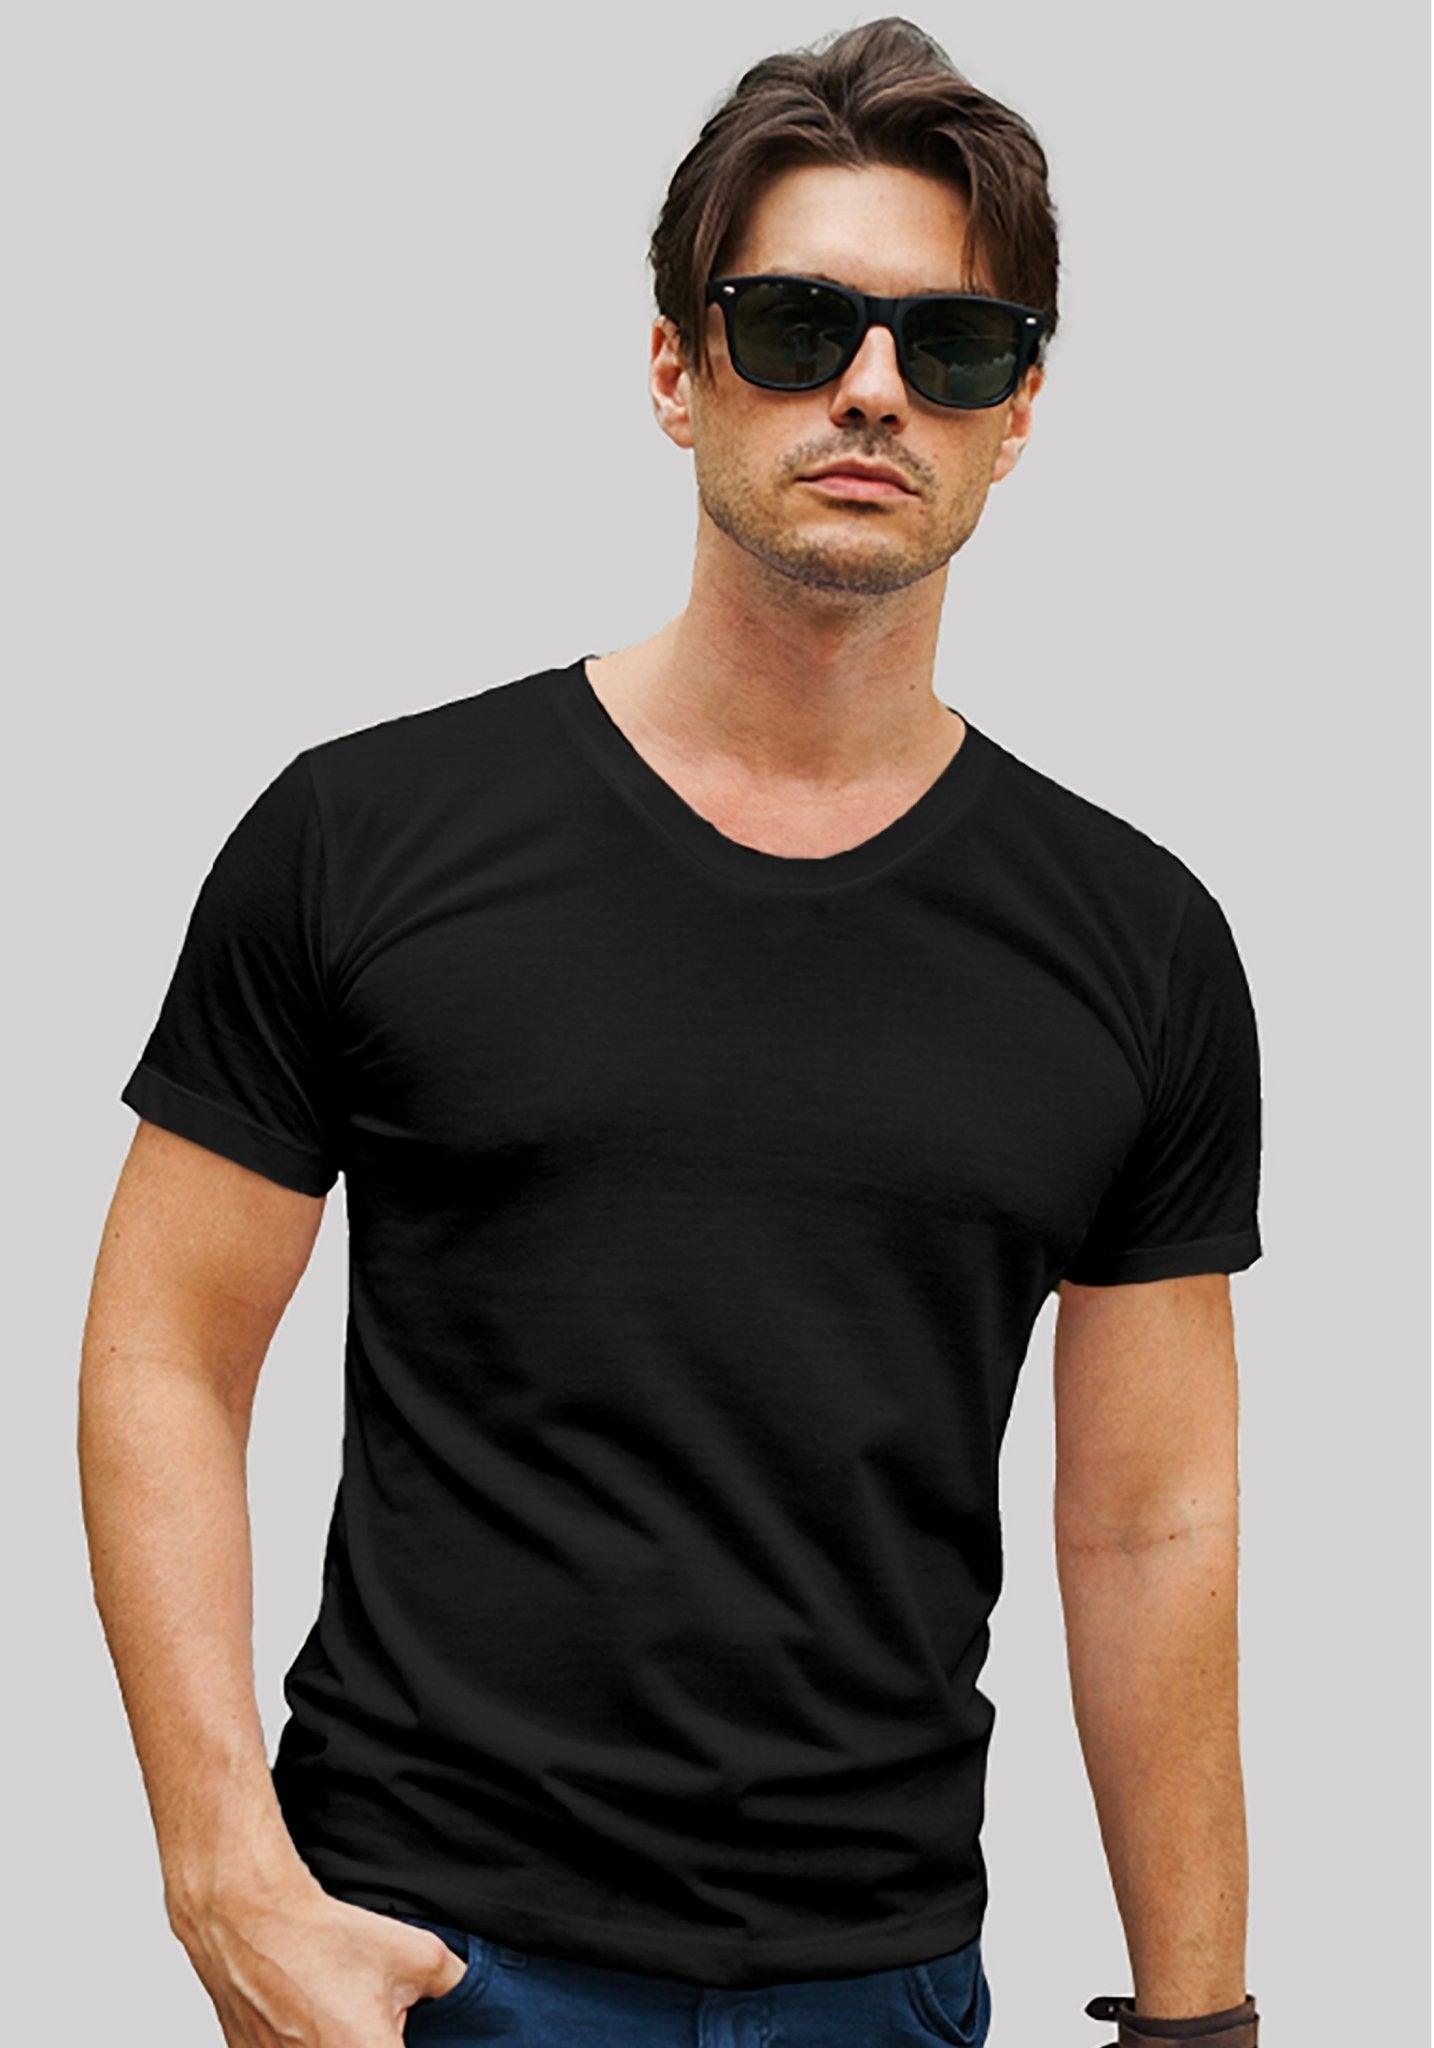 Solid Plain T Shirt For Men In Jet Black Colour